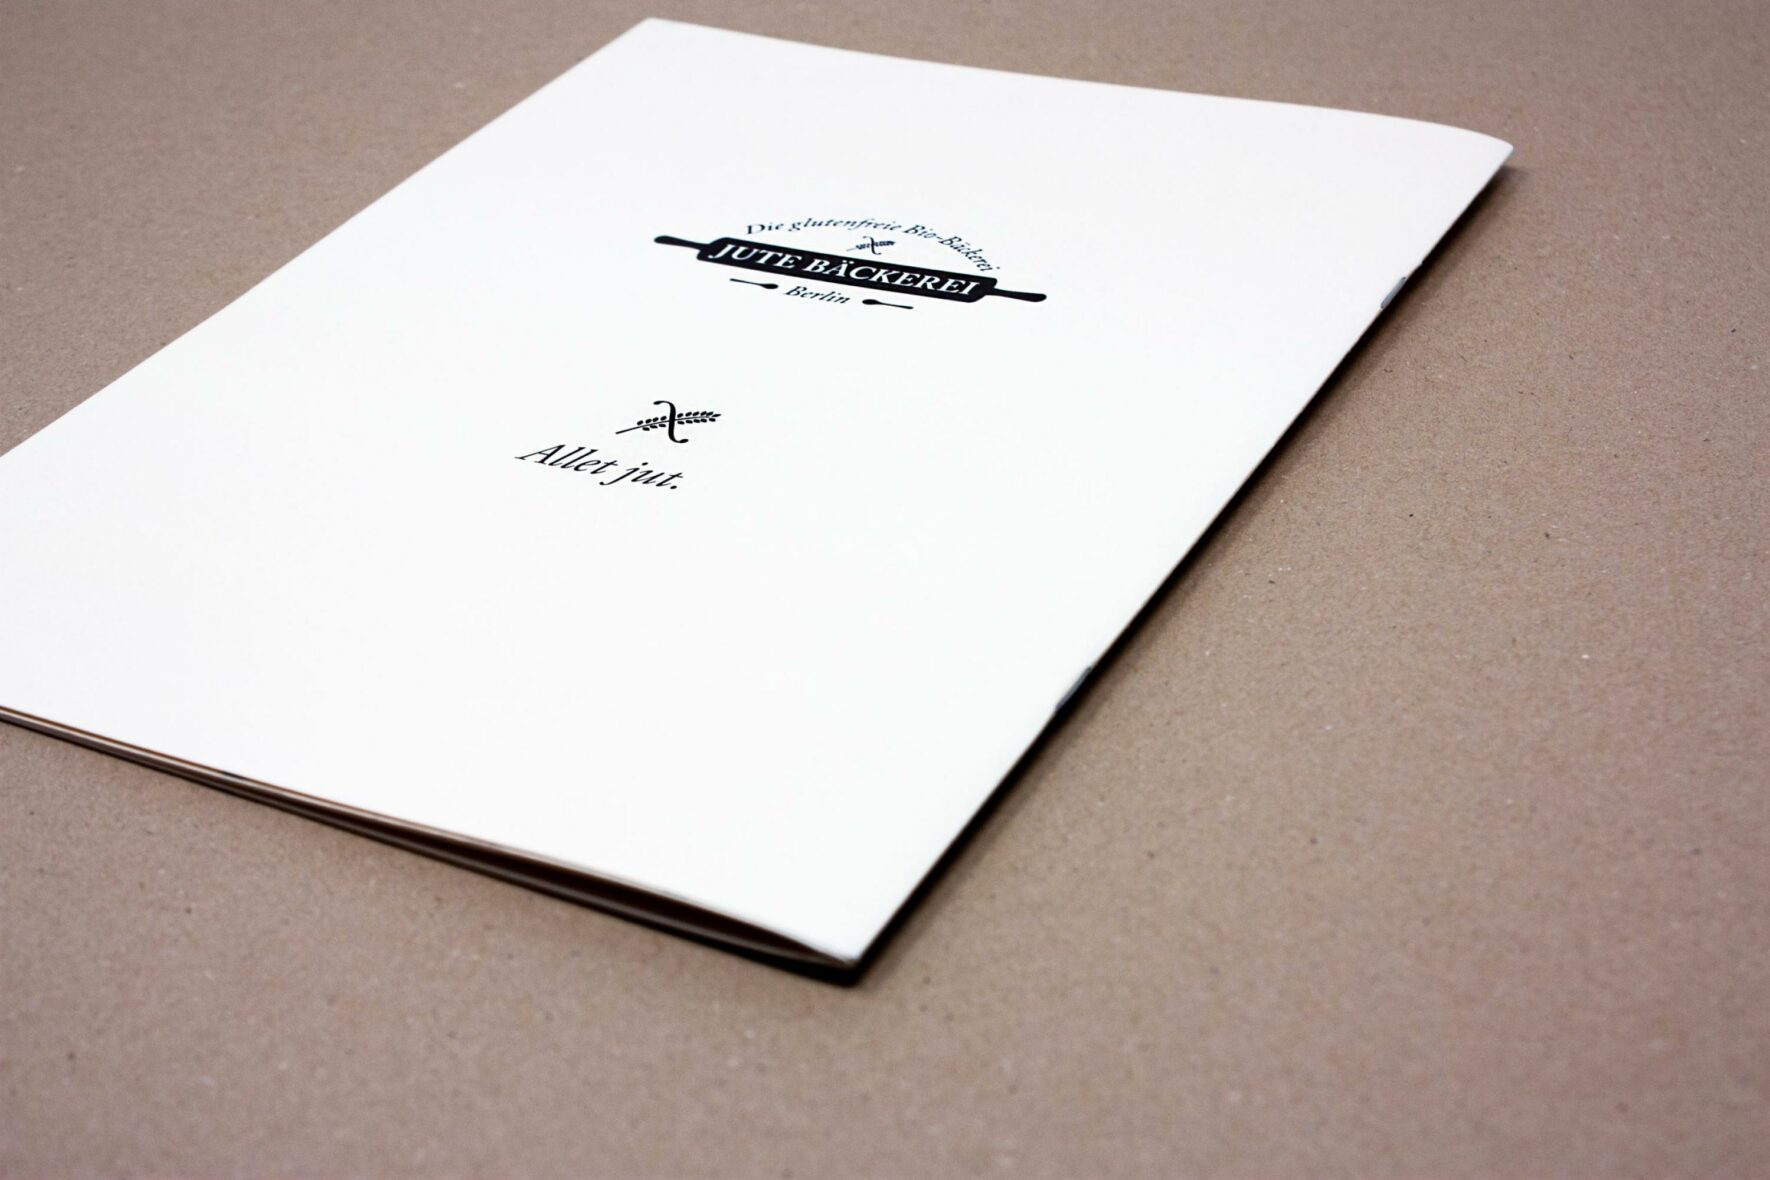 Print-broschuere-jute-baeckerei-formlos-corporate-design-5